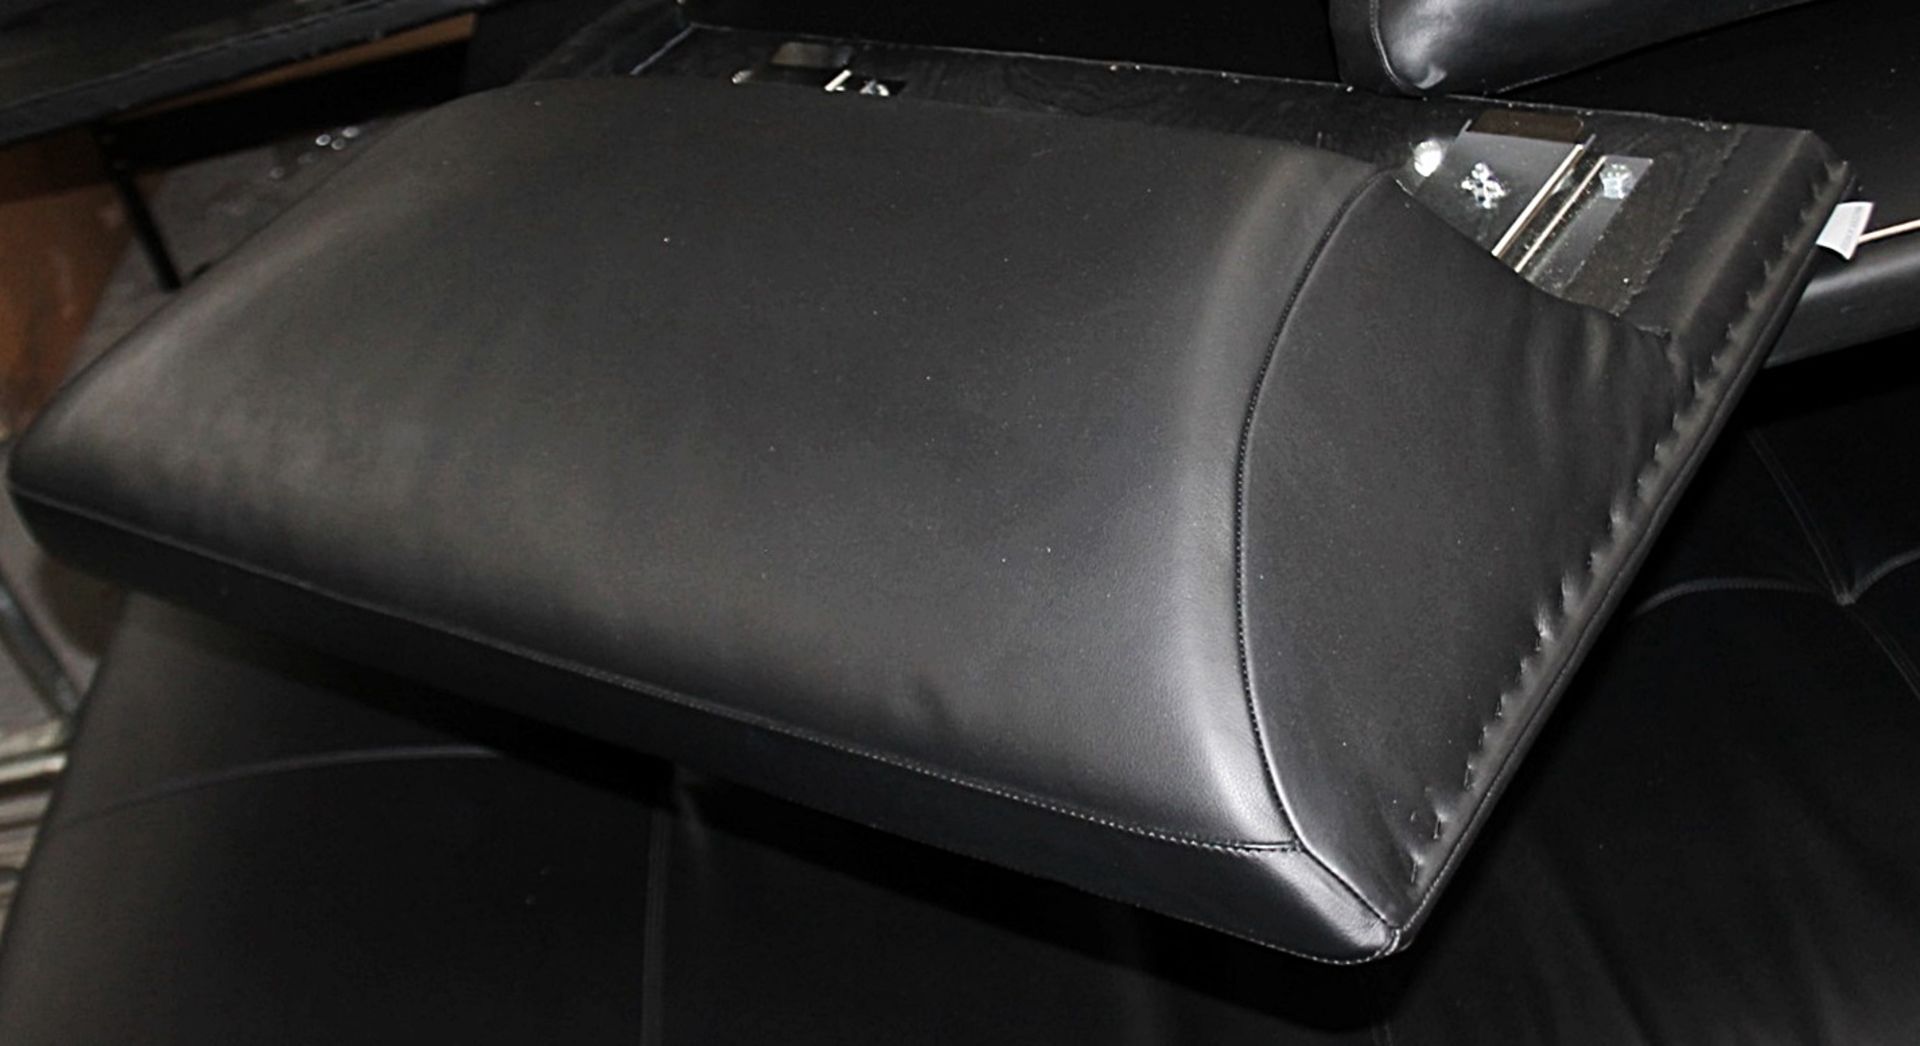 1 x WALTER KNOLL Designer Corner Sofa, Upholstered In A Soft Black Leather - Image 8 of 11